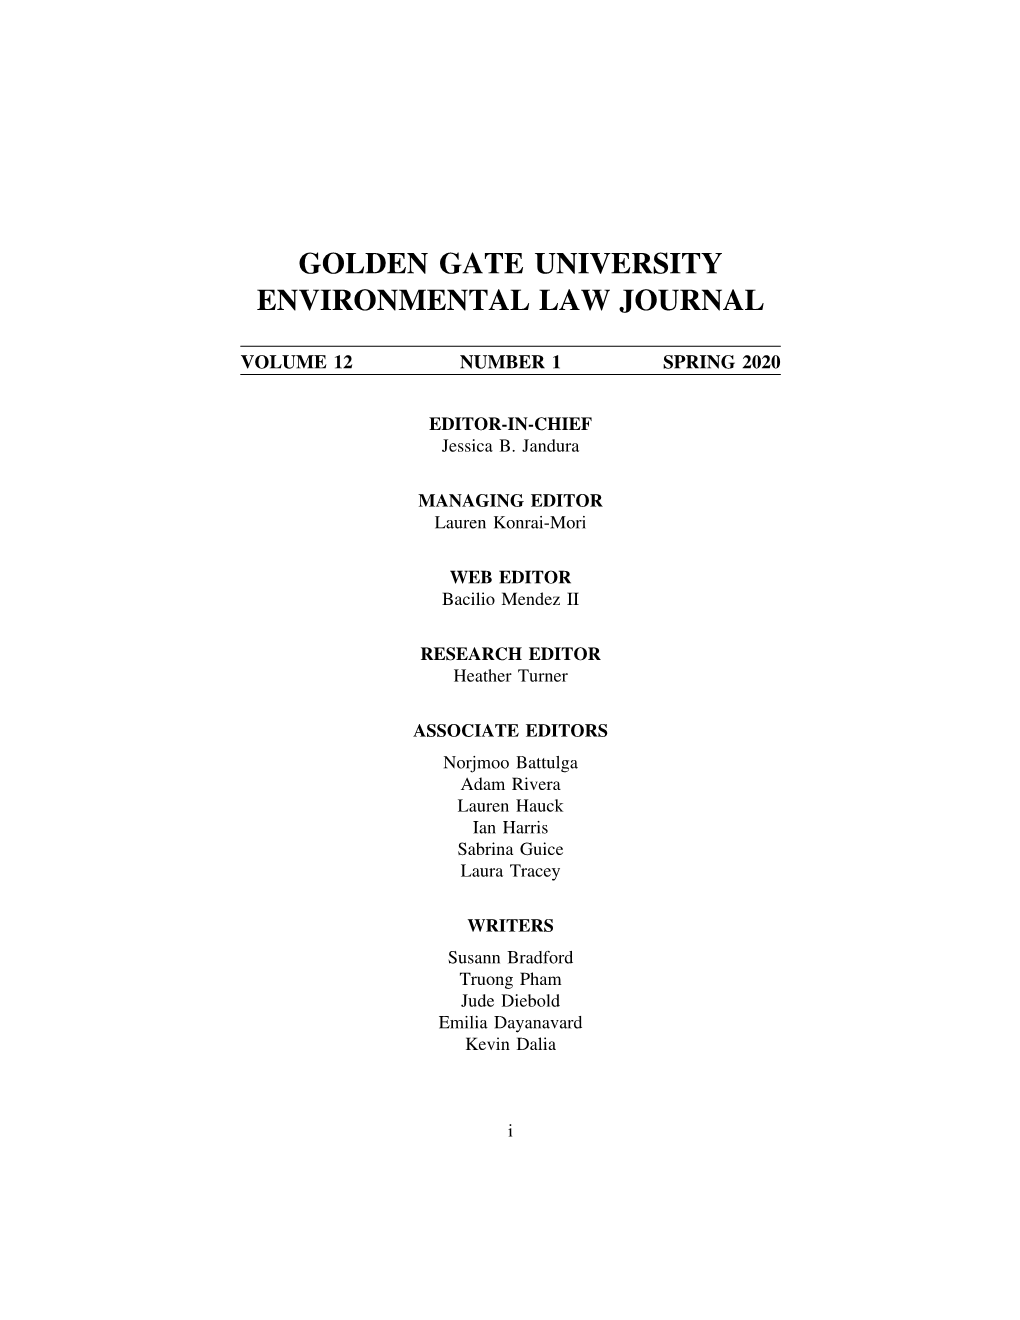 Golden Gate University Environmental Law Journal